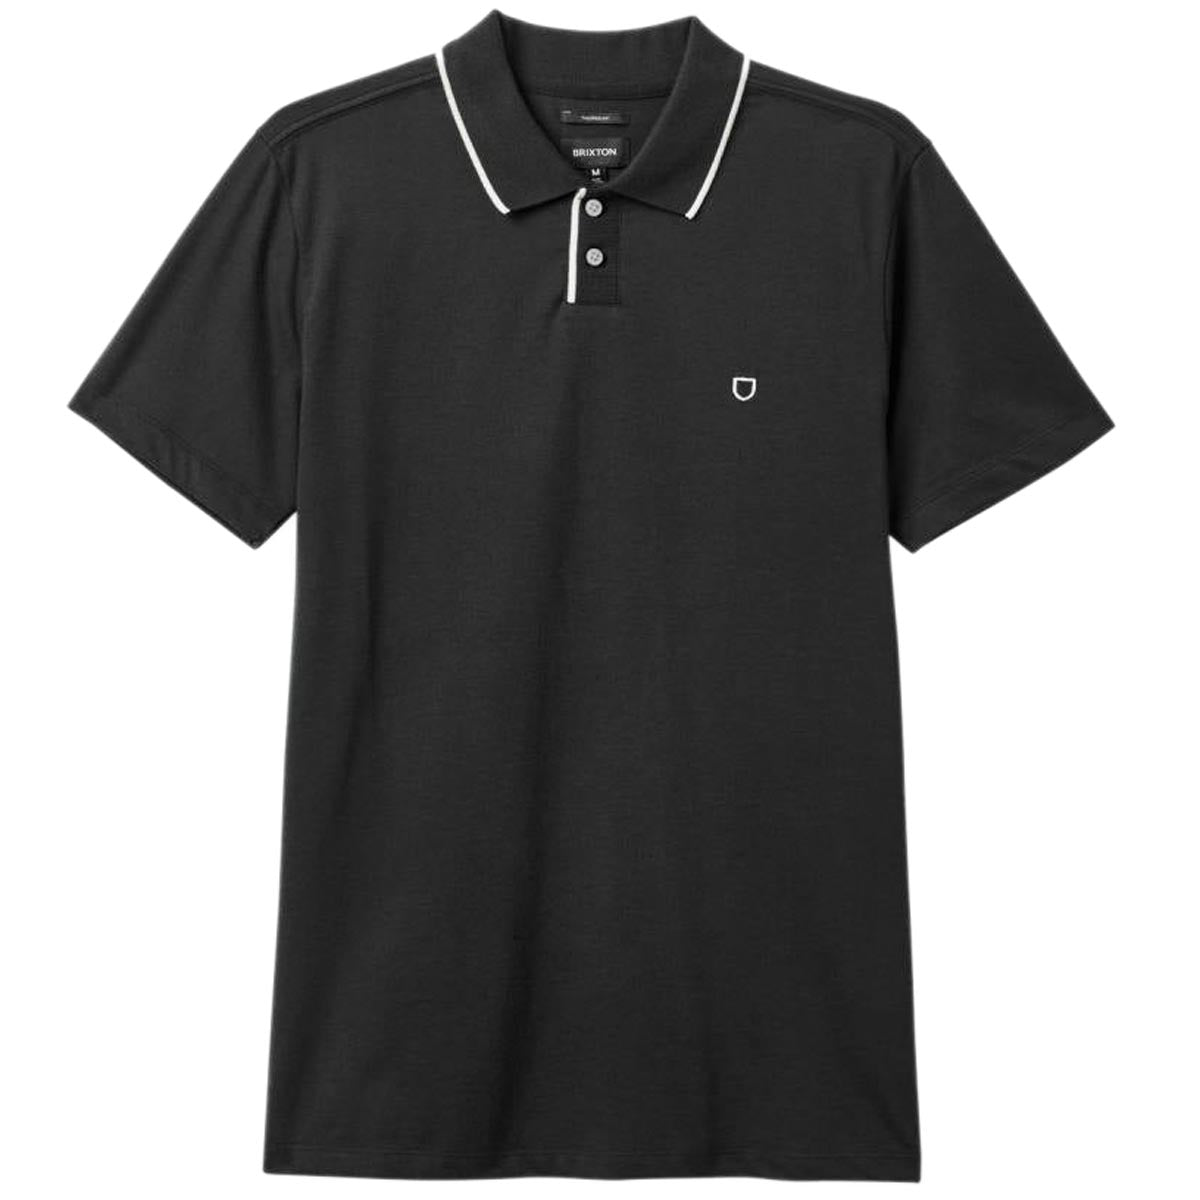 Brixton Mod Flex Polo Shirt - Black image 3